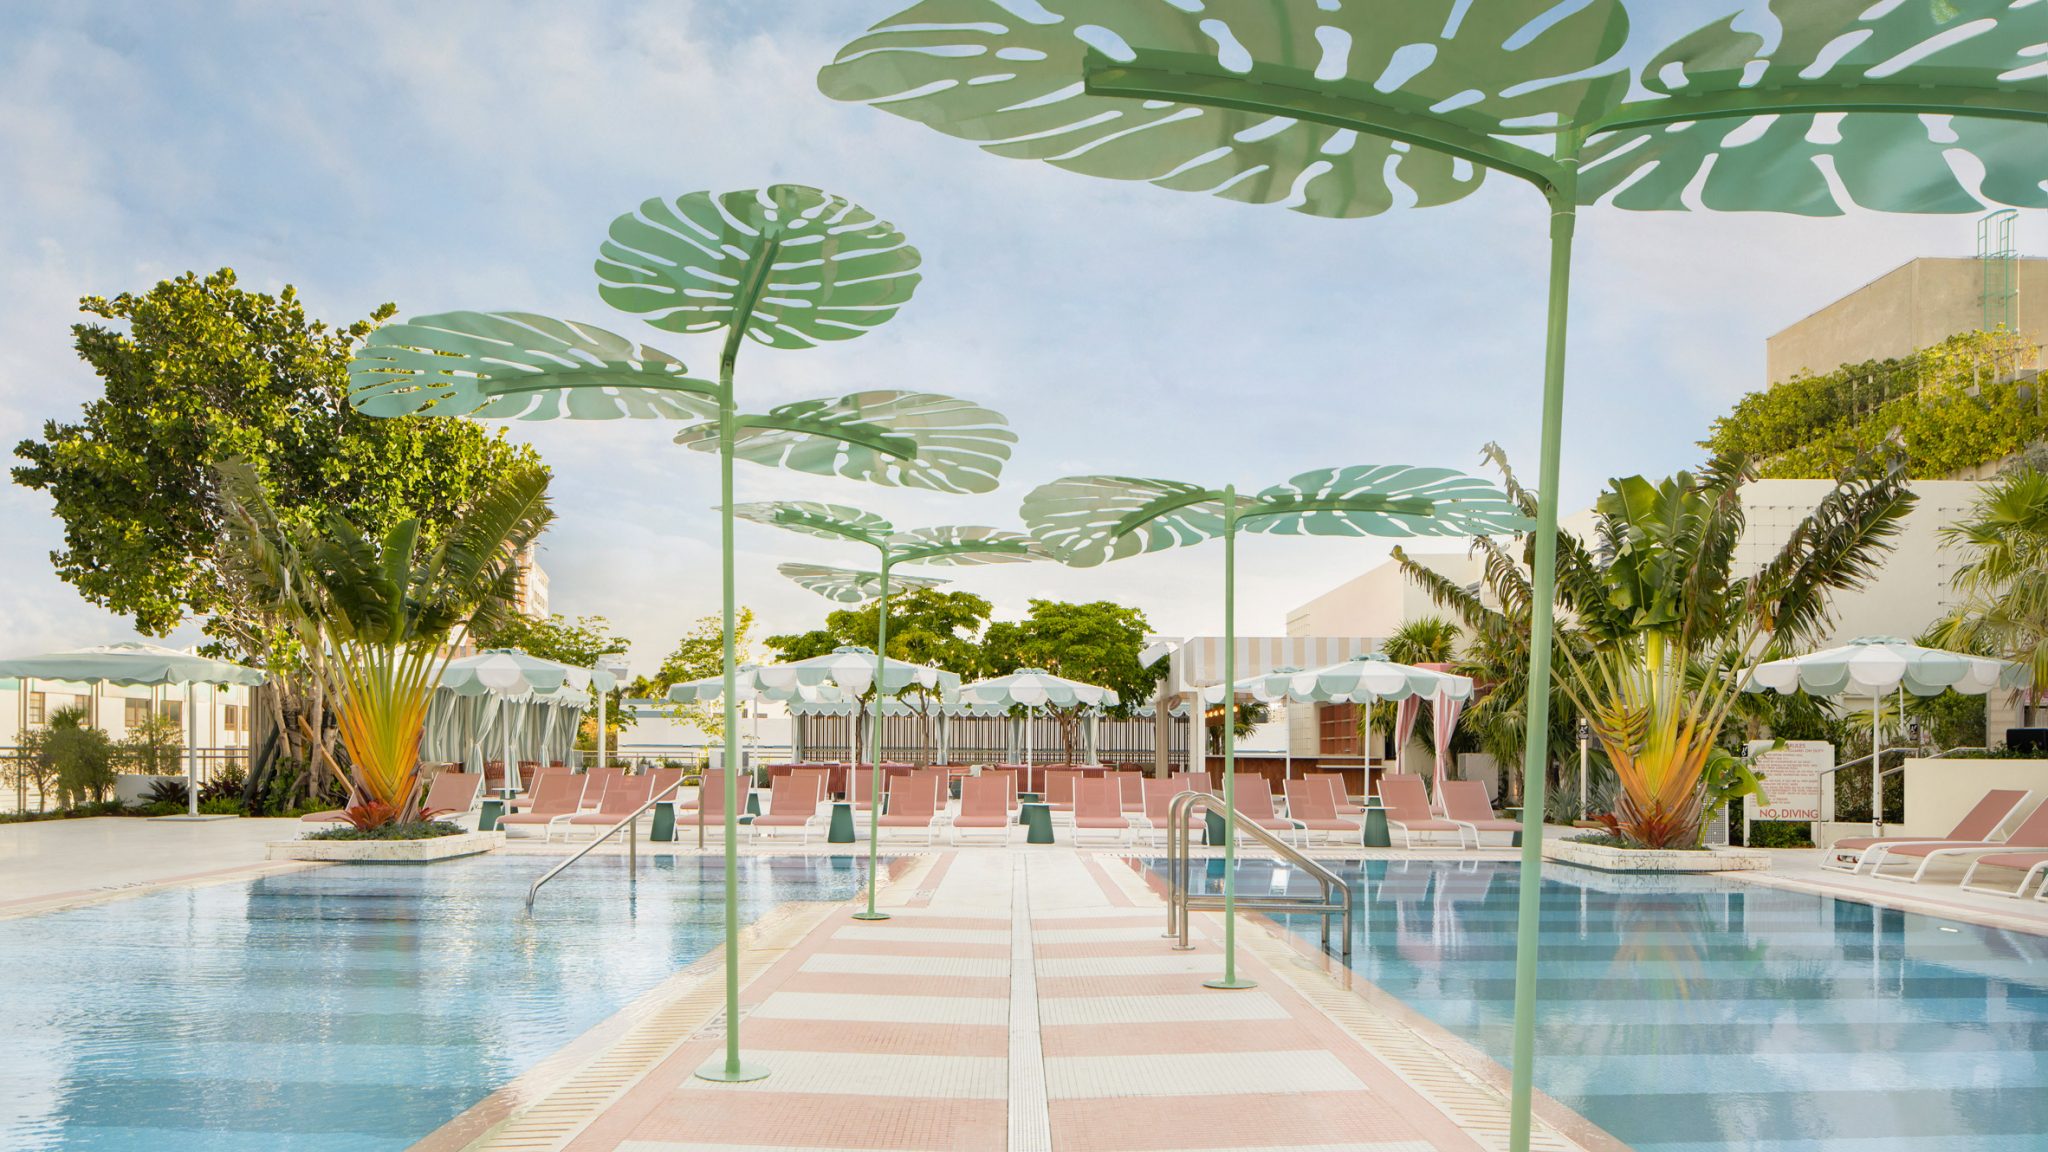 goodtime hotel pharrell williams miami david grutman piscina cores pastéis arquitetura construção